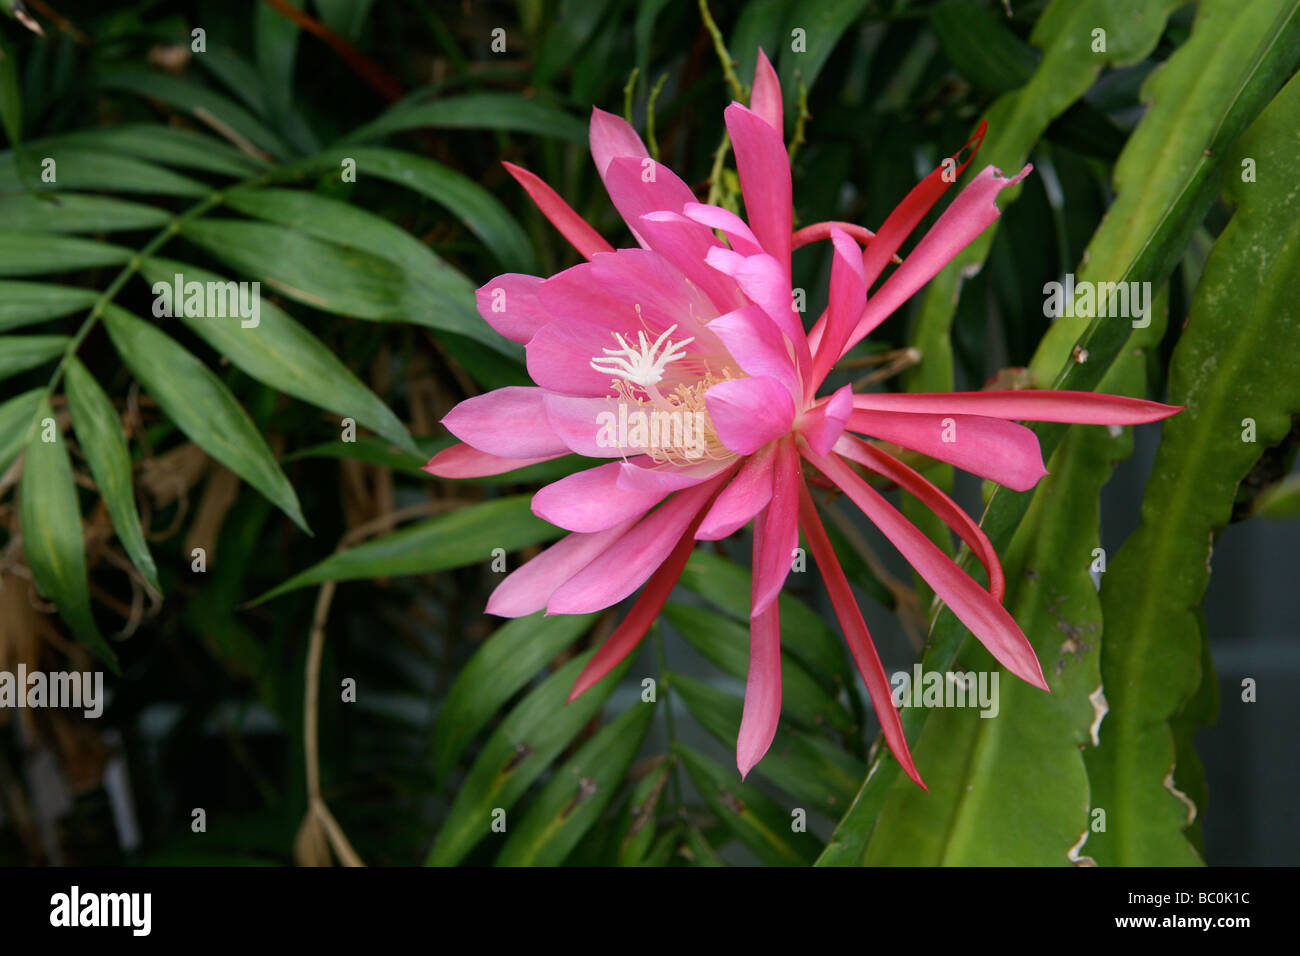 A brilliant pink epiphyllum cactus flower. Stock Photo